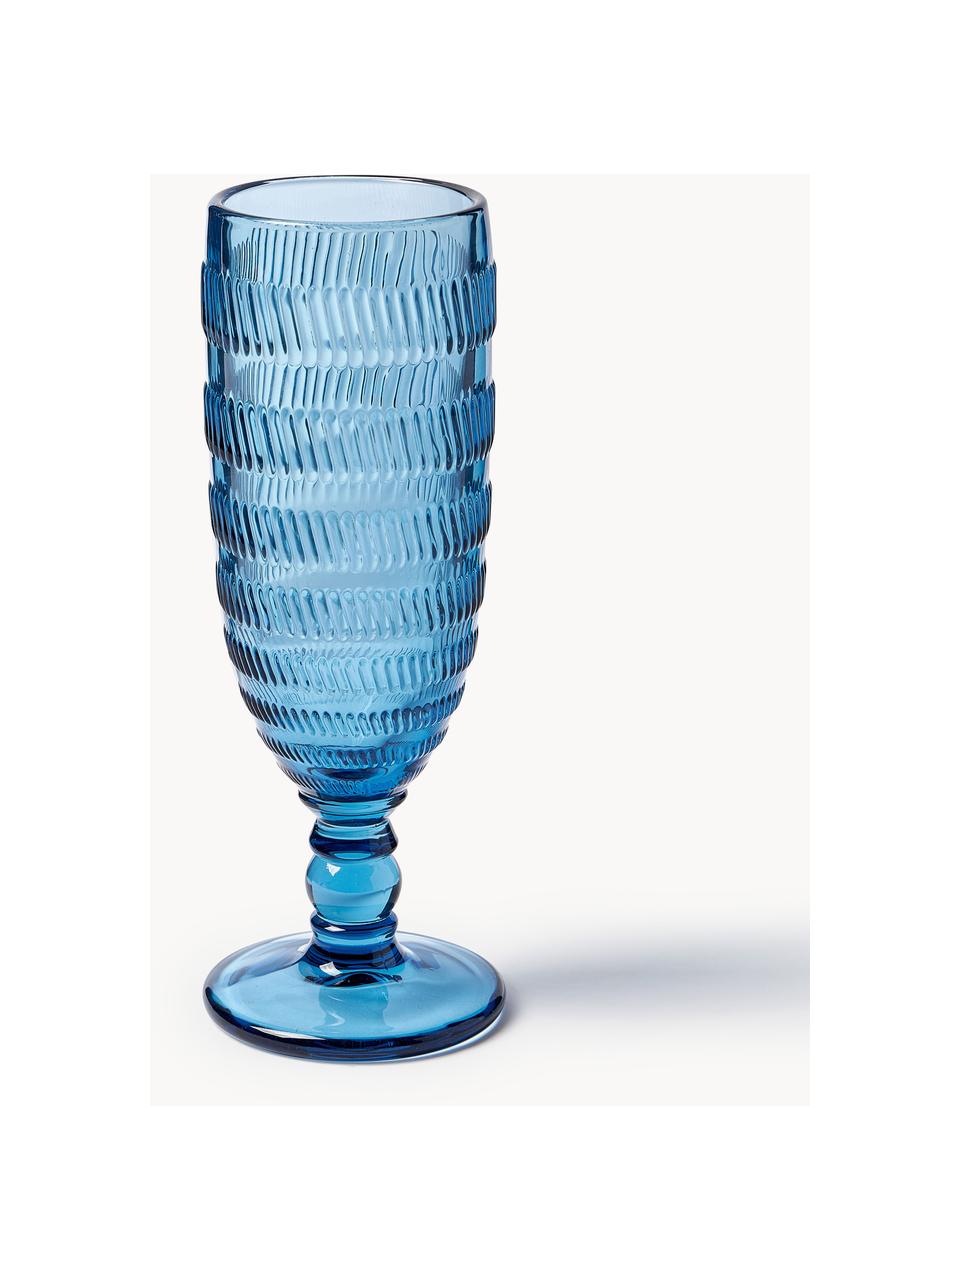 Sektgläser Geometrie mit Strukturmuster, 6er-Set, Glas, Bunt, Ø 6 x H 18 cm, 160 ml